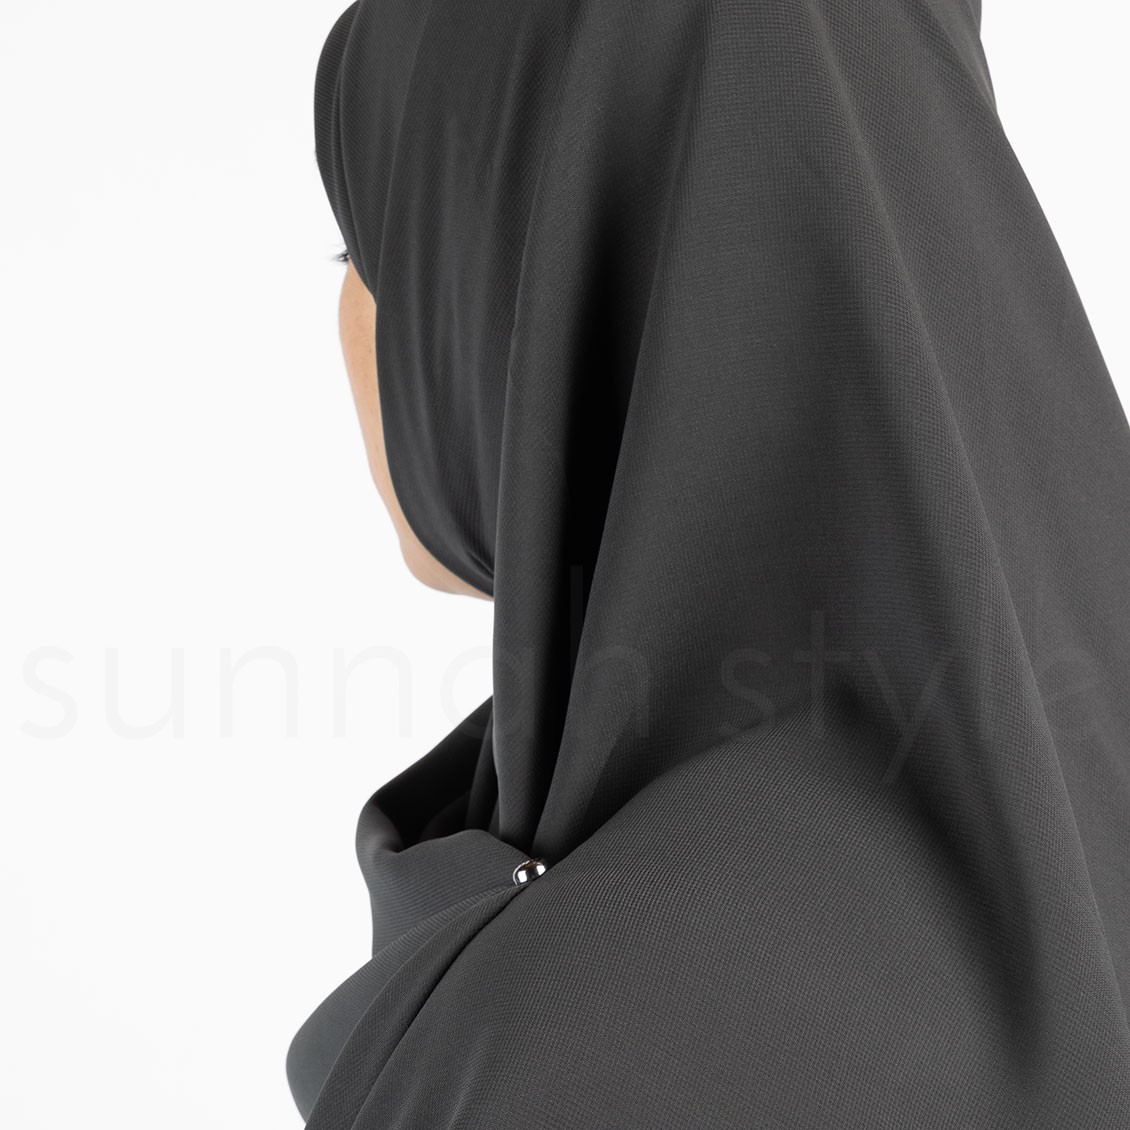 Sunnah Style Essentials Square Hijab Large Dark Grey